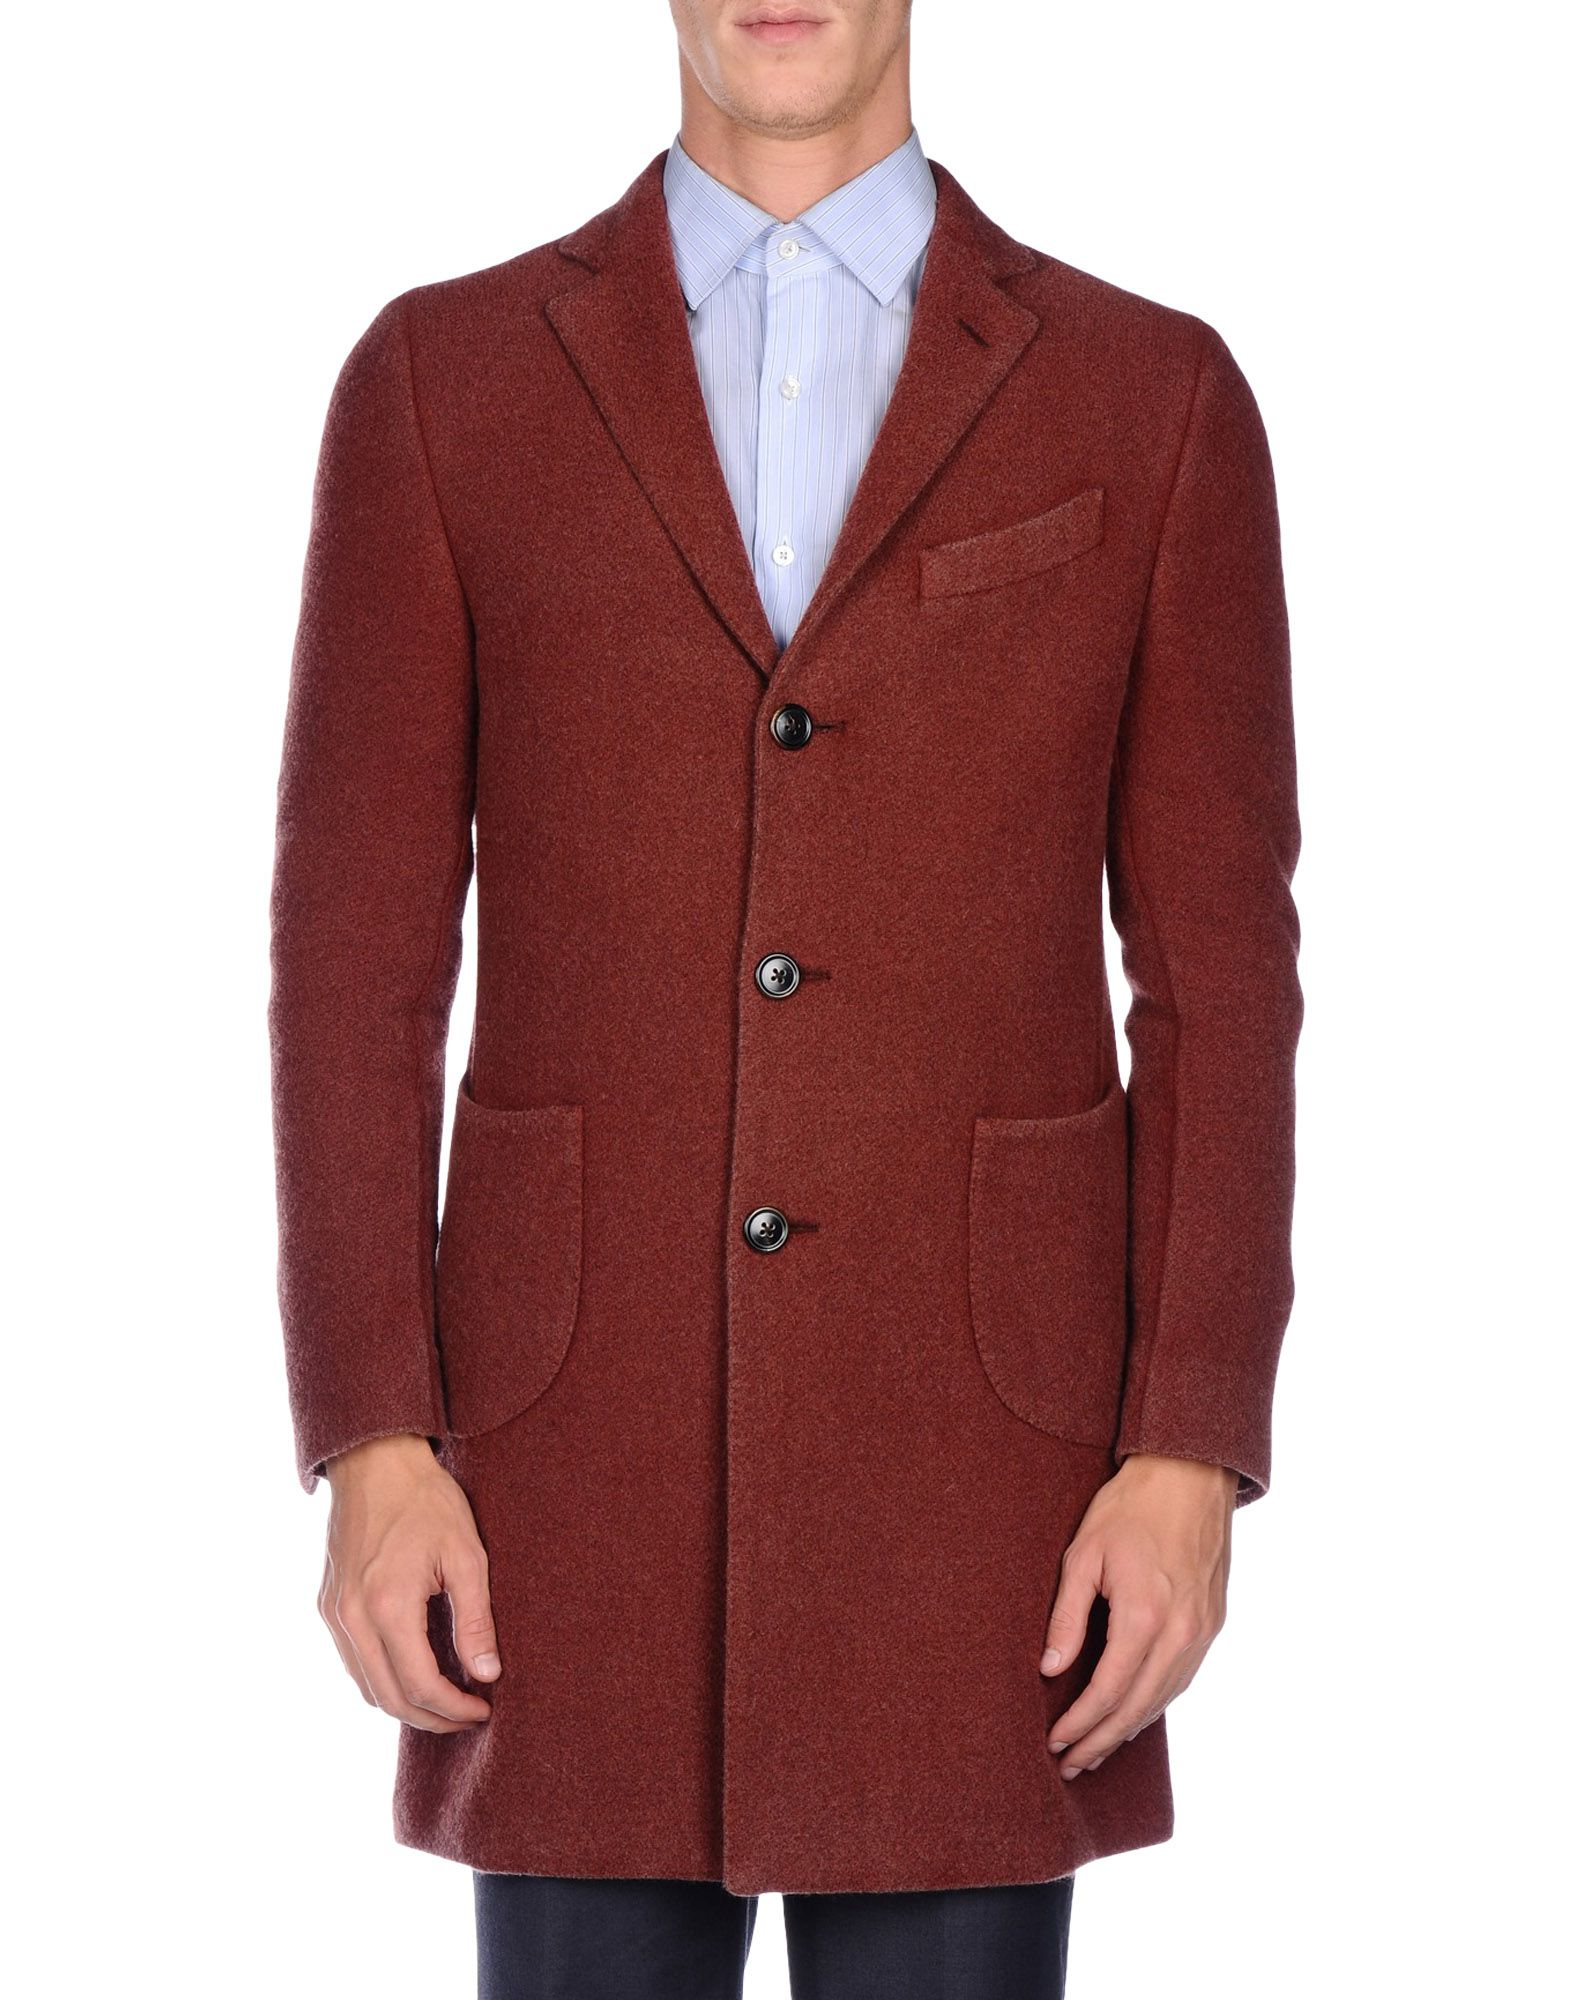 Lyst - Lardini Coat in Red for Men